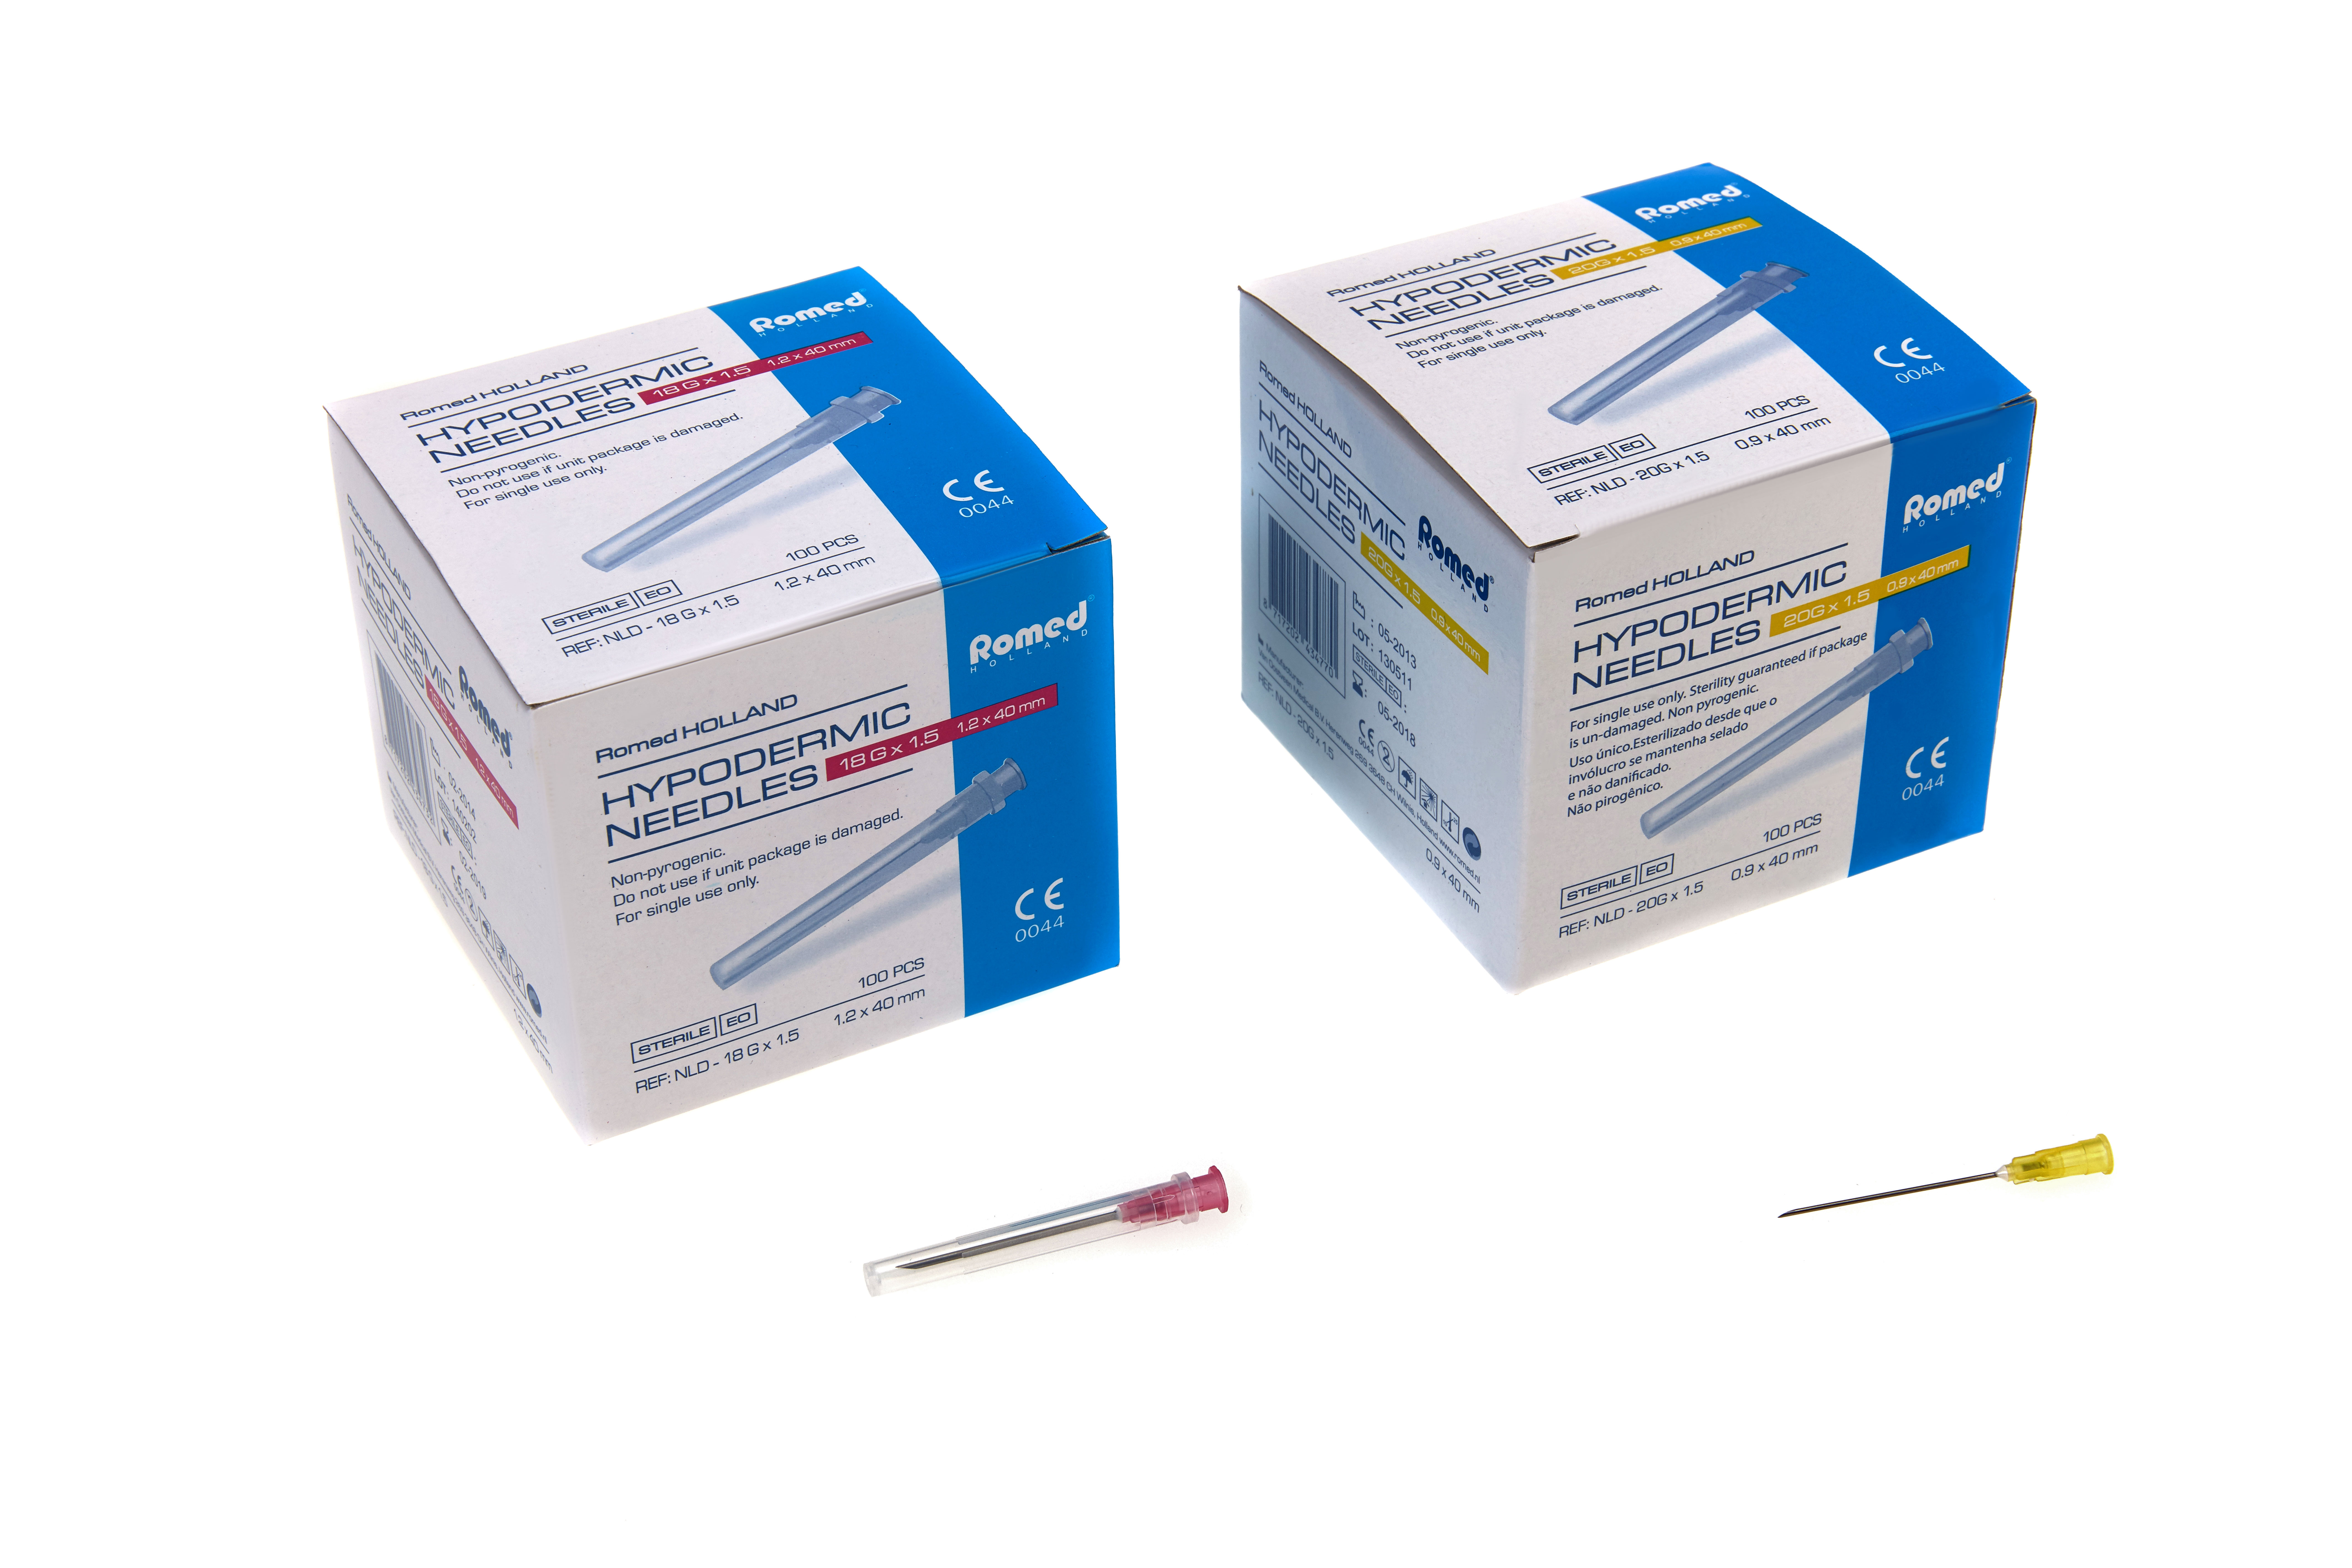 NLD-18GX1.5 Romed hypodermic needles, 18gx1.5", sterile per piece, 100 pcs in an inner box, 50 x 100 pcs = 5.000 pcs in a carton.